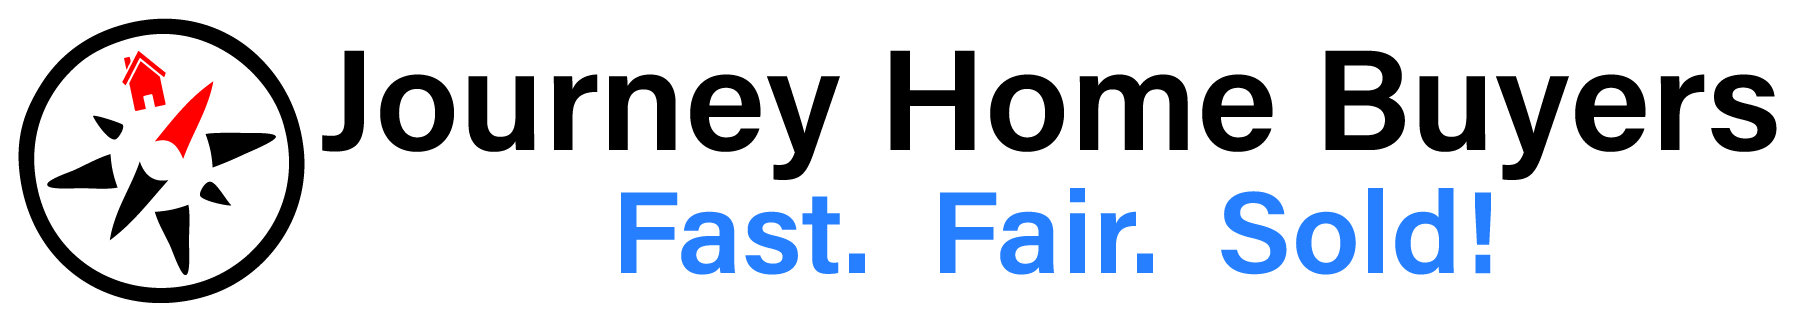 Journey Home Buyers logo